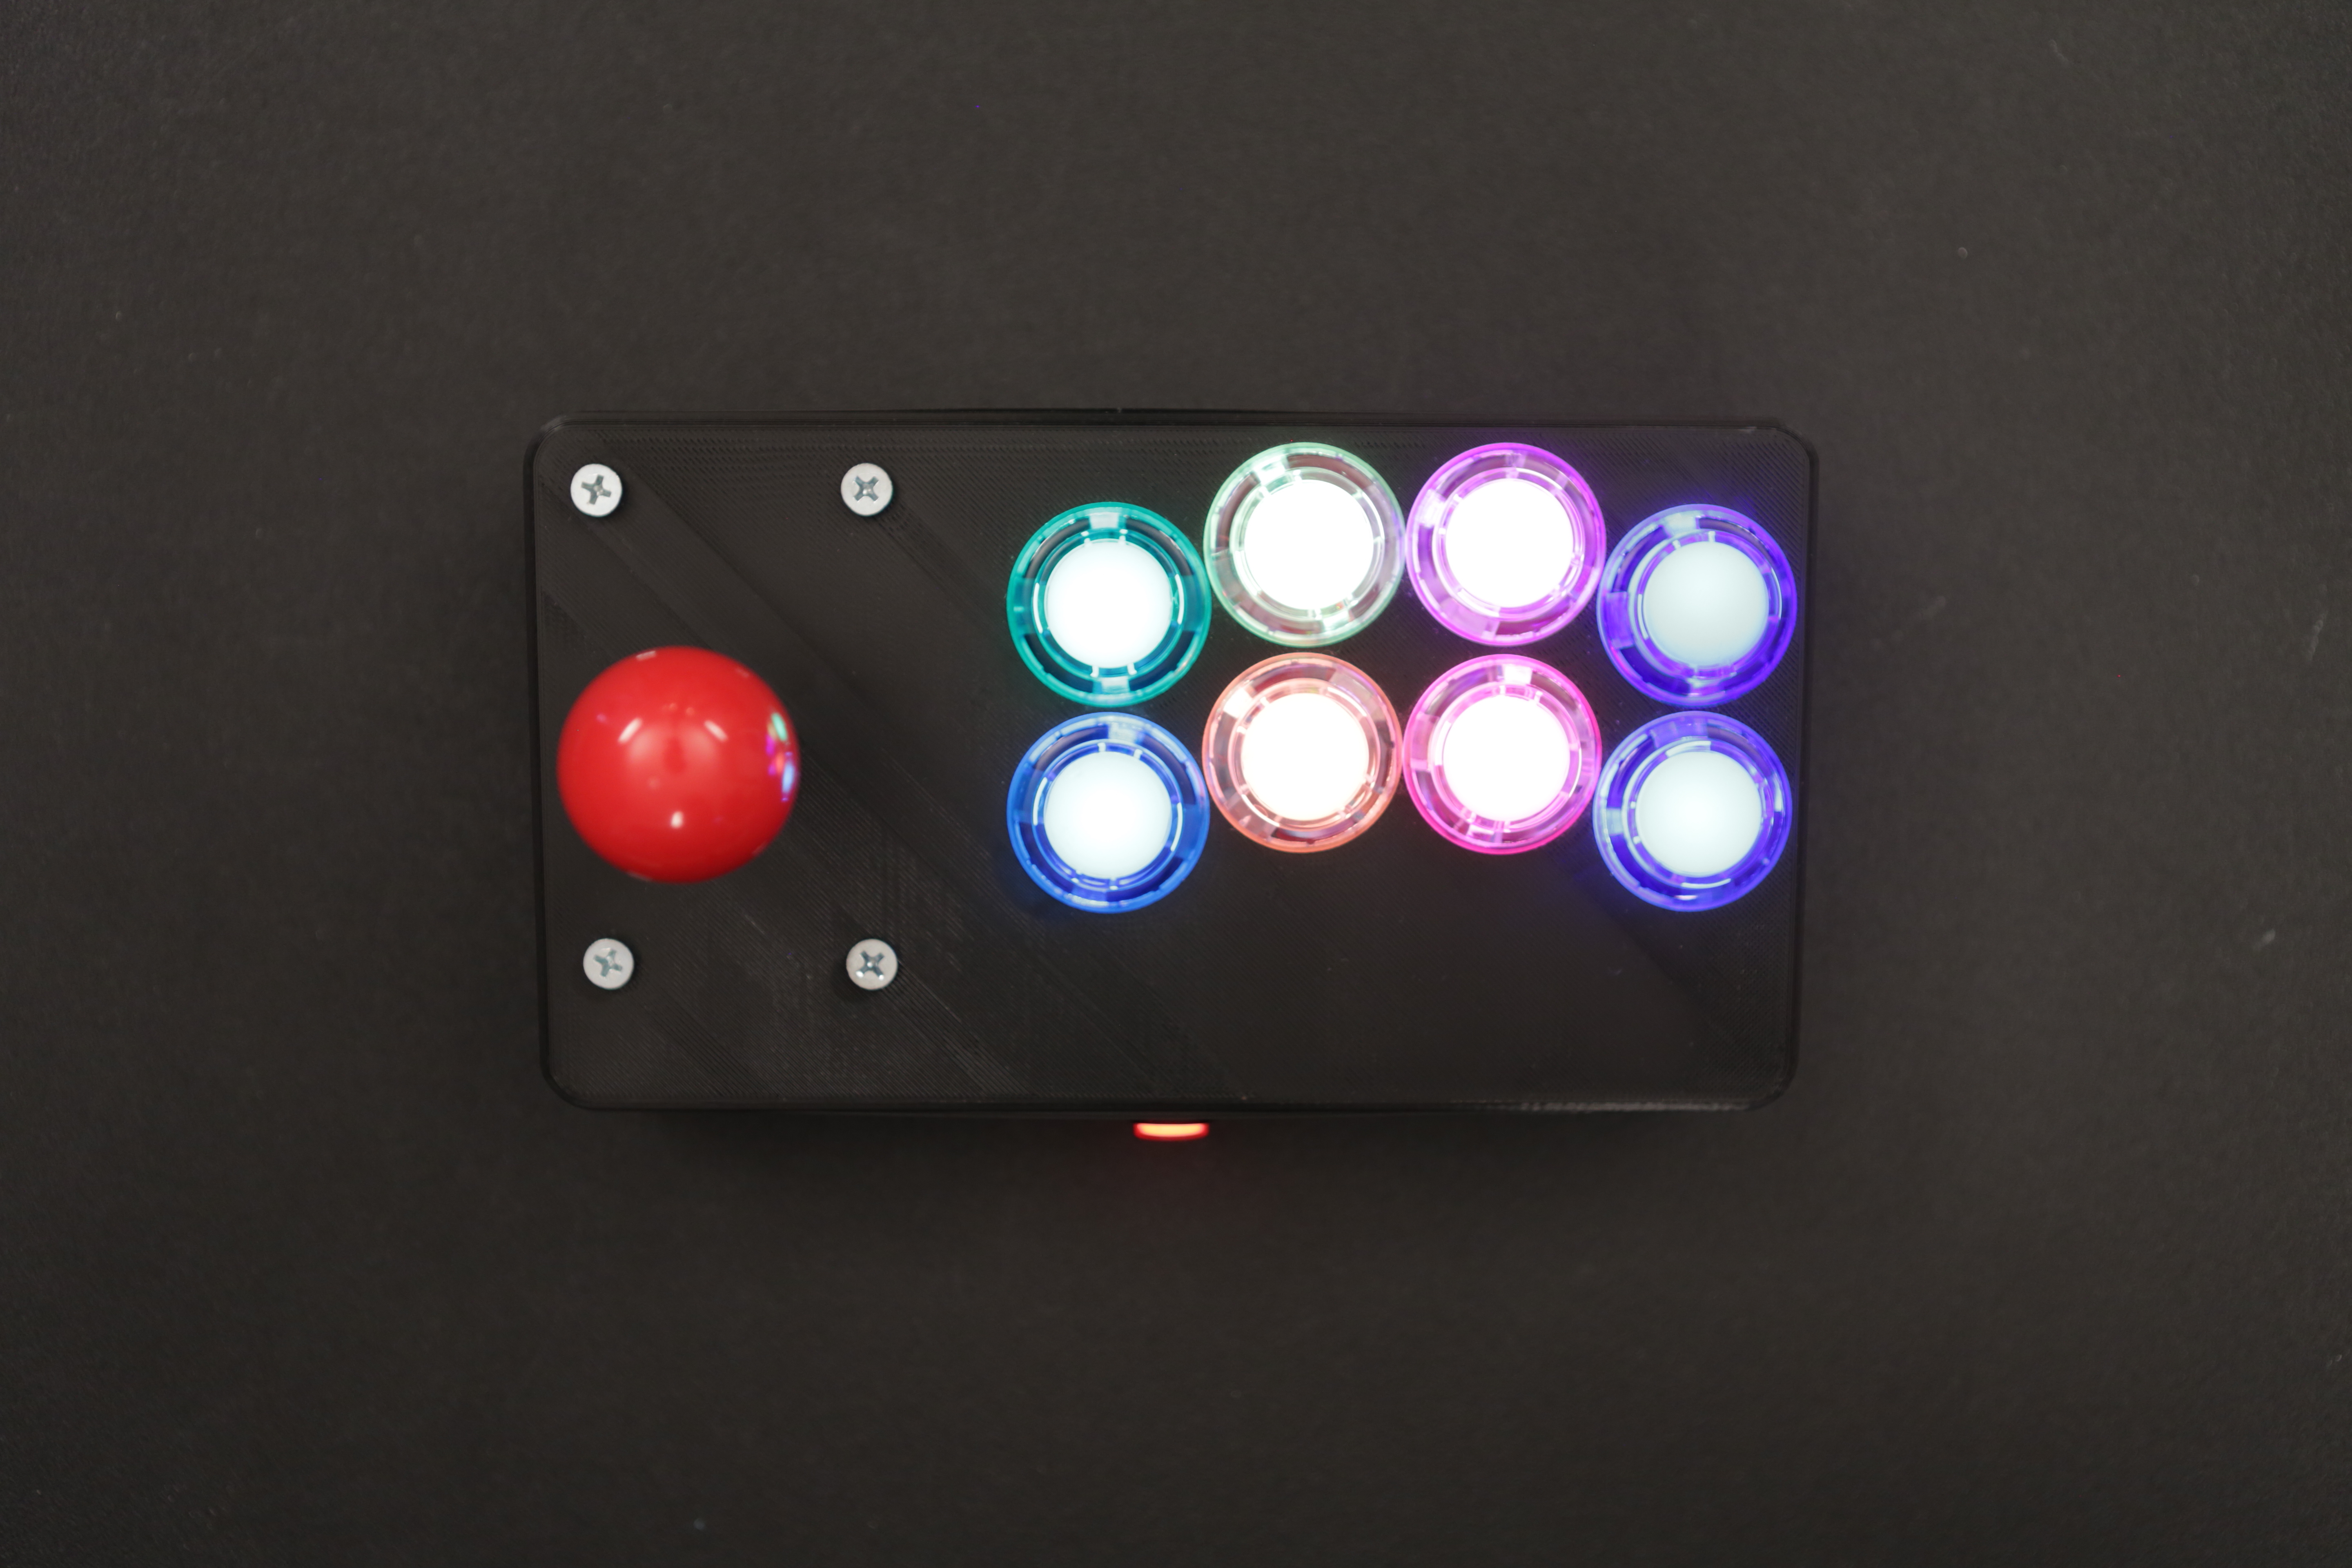 NeoPixel Arcade Buttons